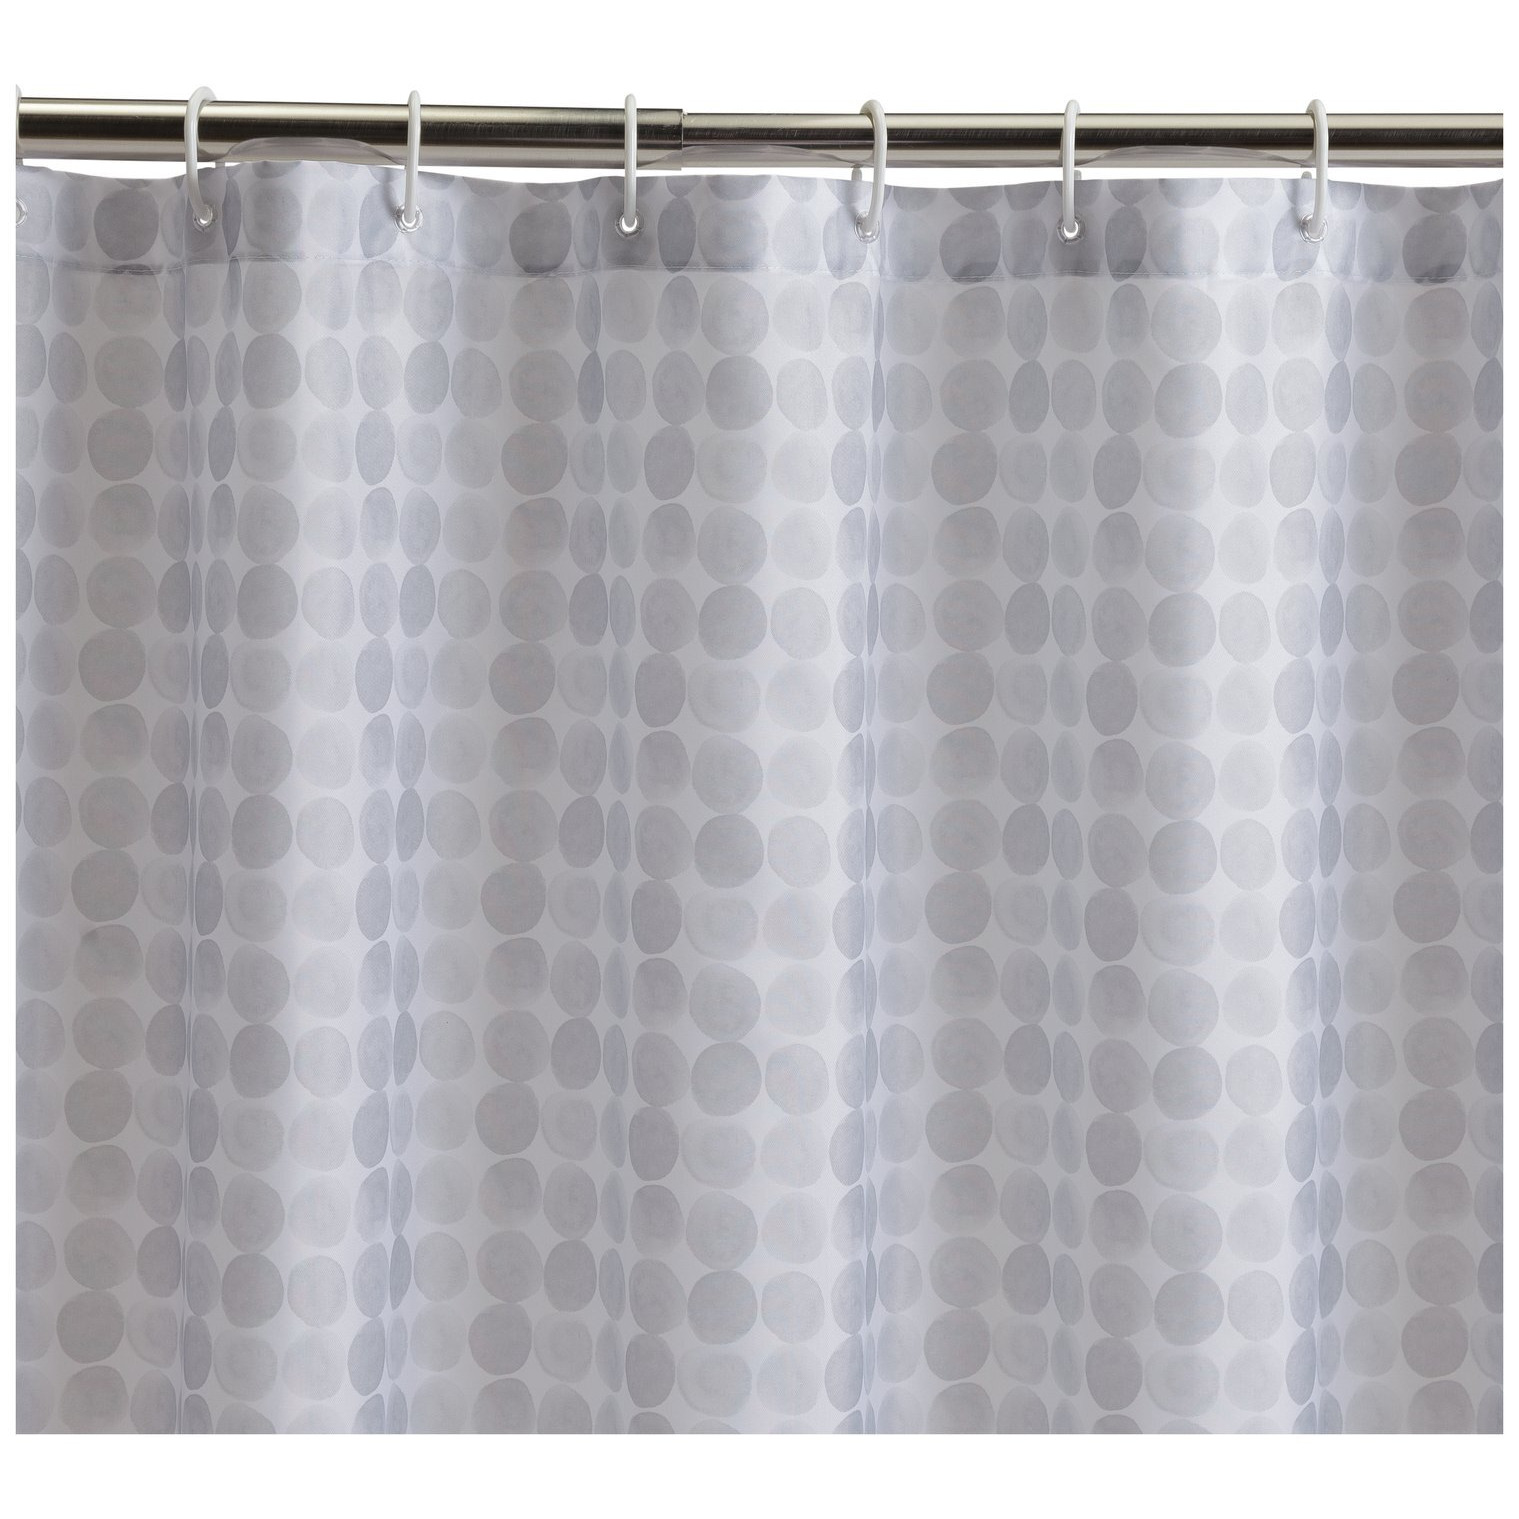 Argos Home Spot Shower Curtain - Grey - image 1